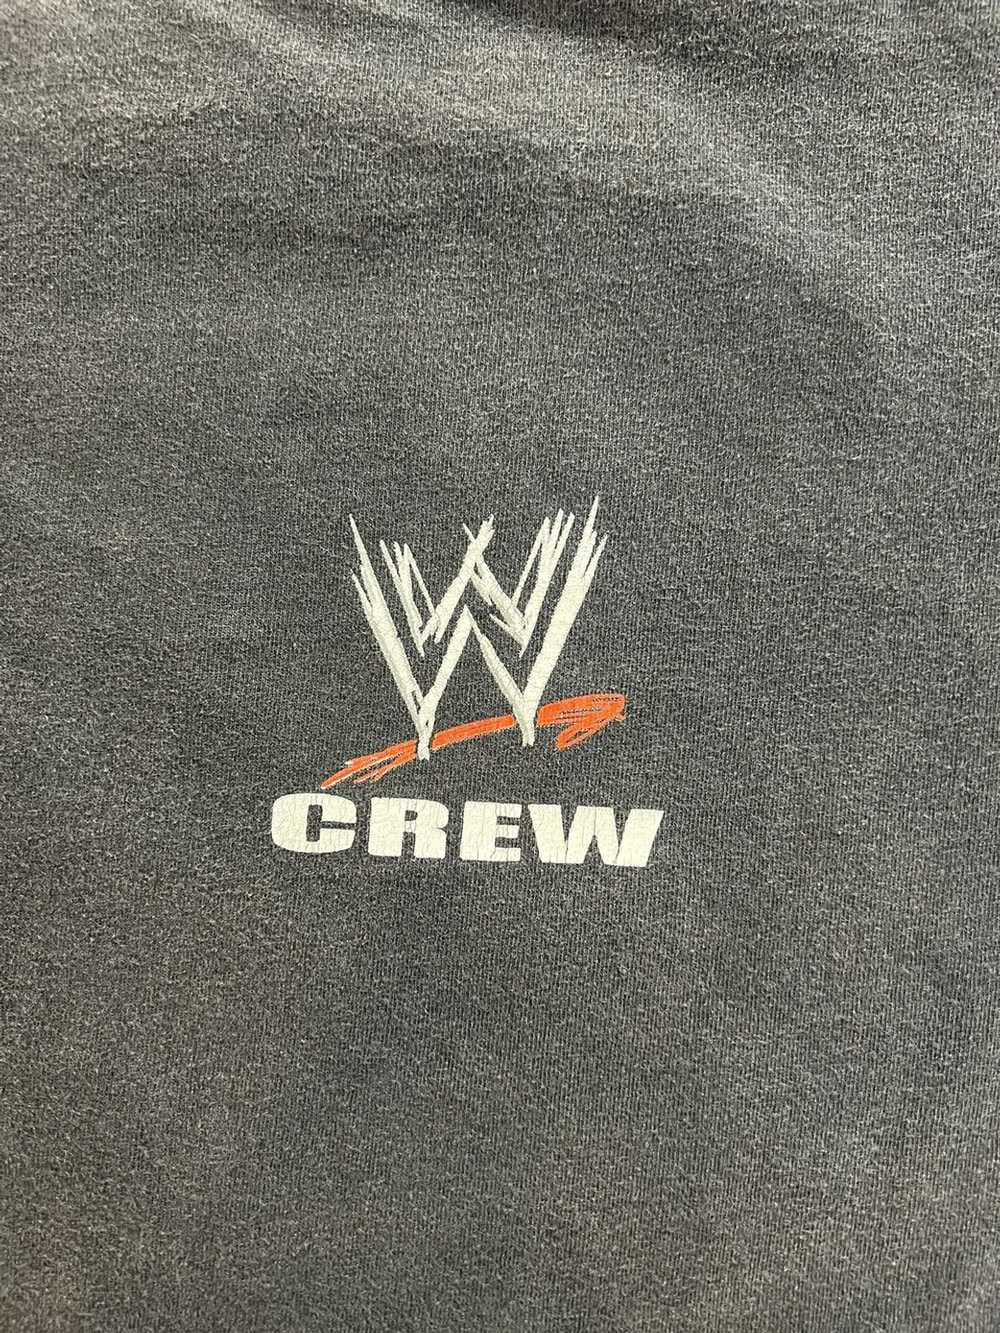 Wwe 2009 WWE Crew SummerSlam Event T-Shirt Men’s … - image 4